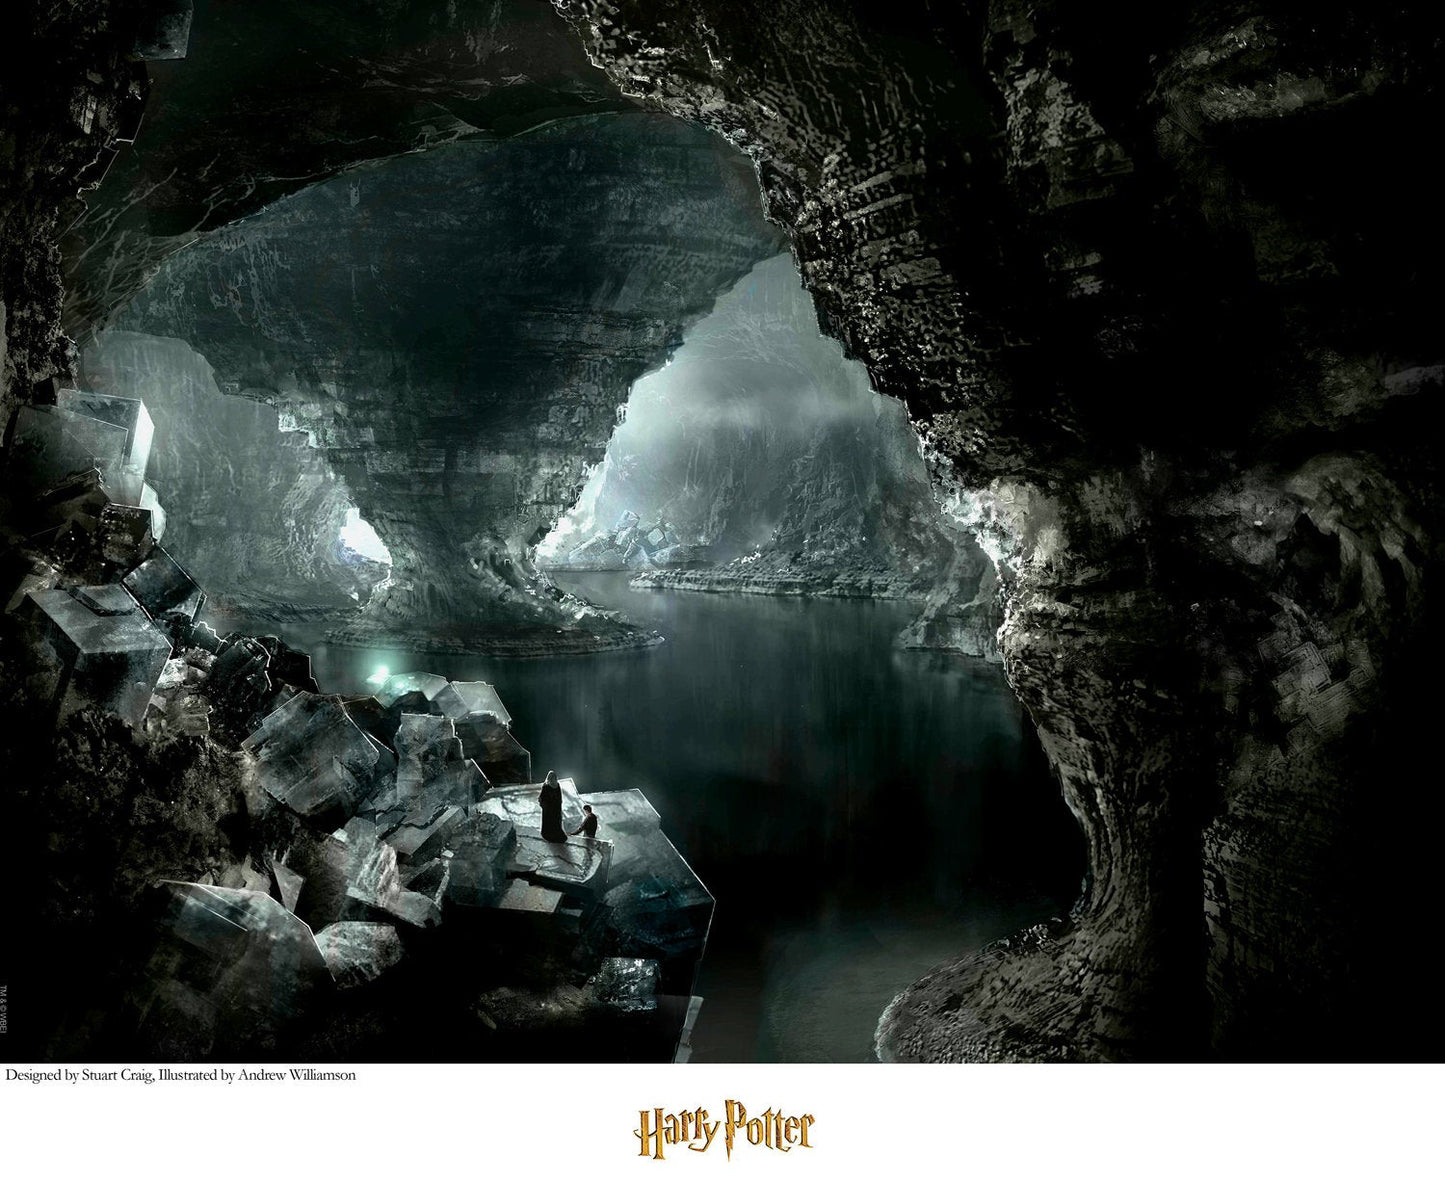 Harry Potter Horcrux Cave Stuart Craig SIGNED Warner Brothers Giclee on Paper Limited Ed of 250